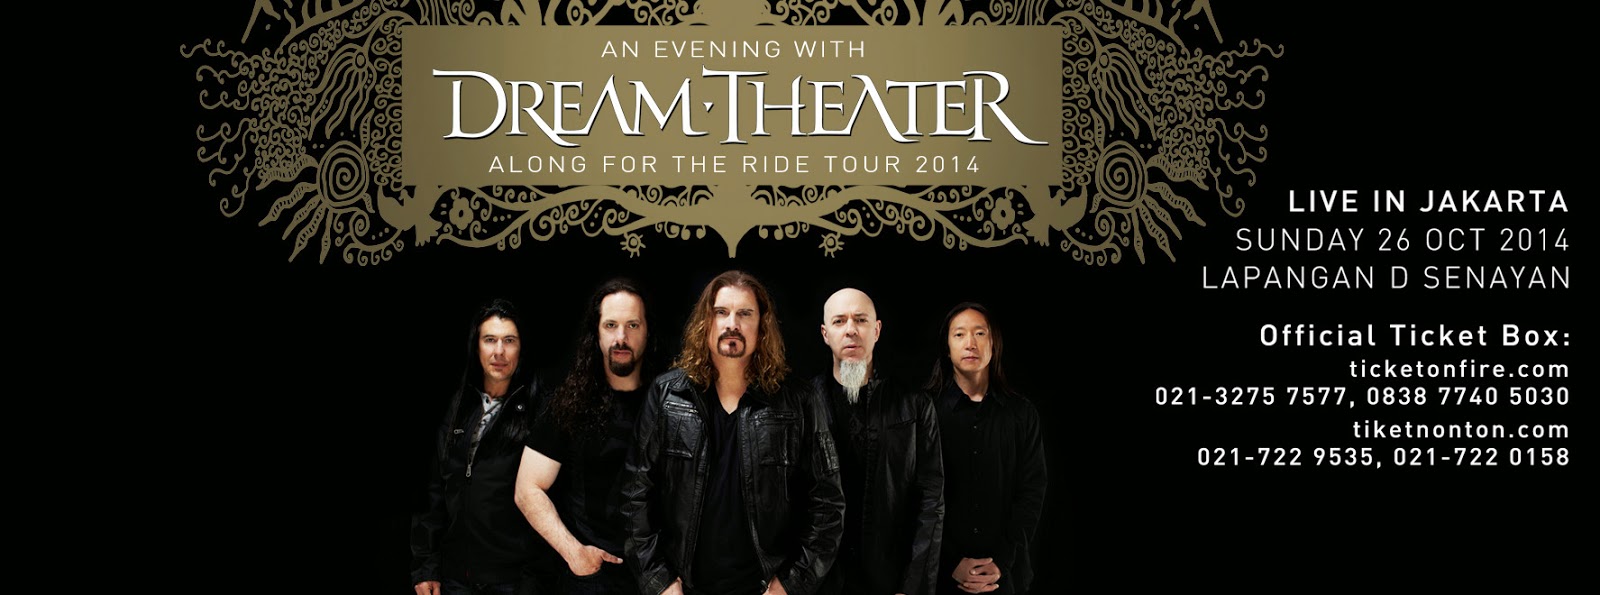 Theatre перевод на русский. Best of times Dream Theater Notes. Dream Theater - the score so far.